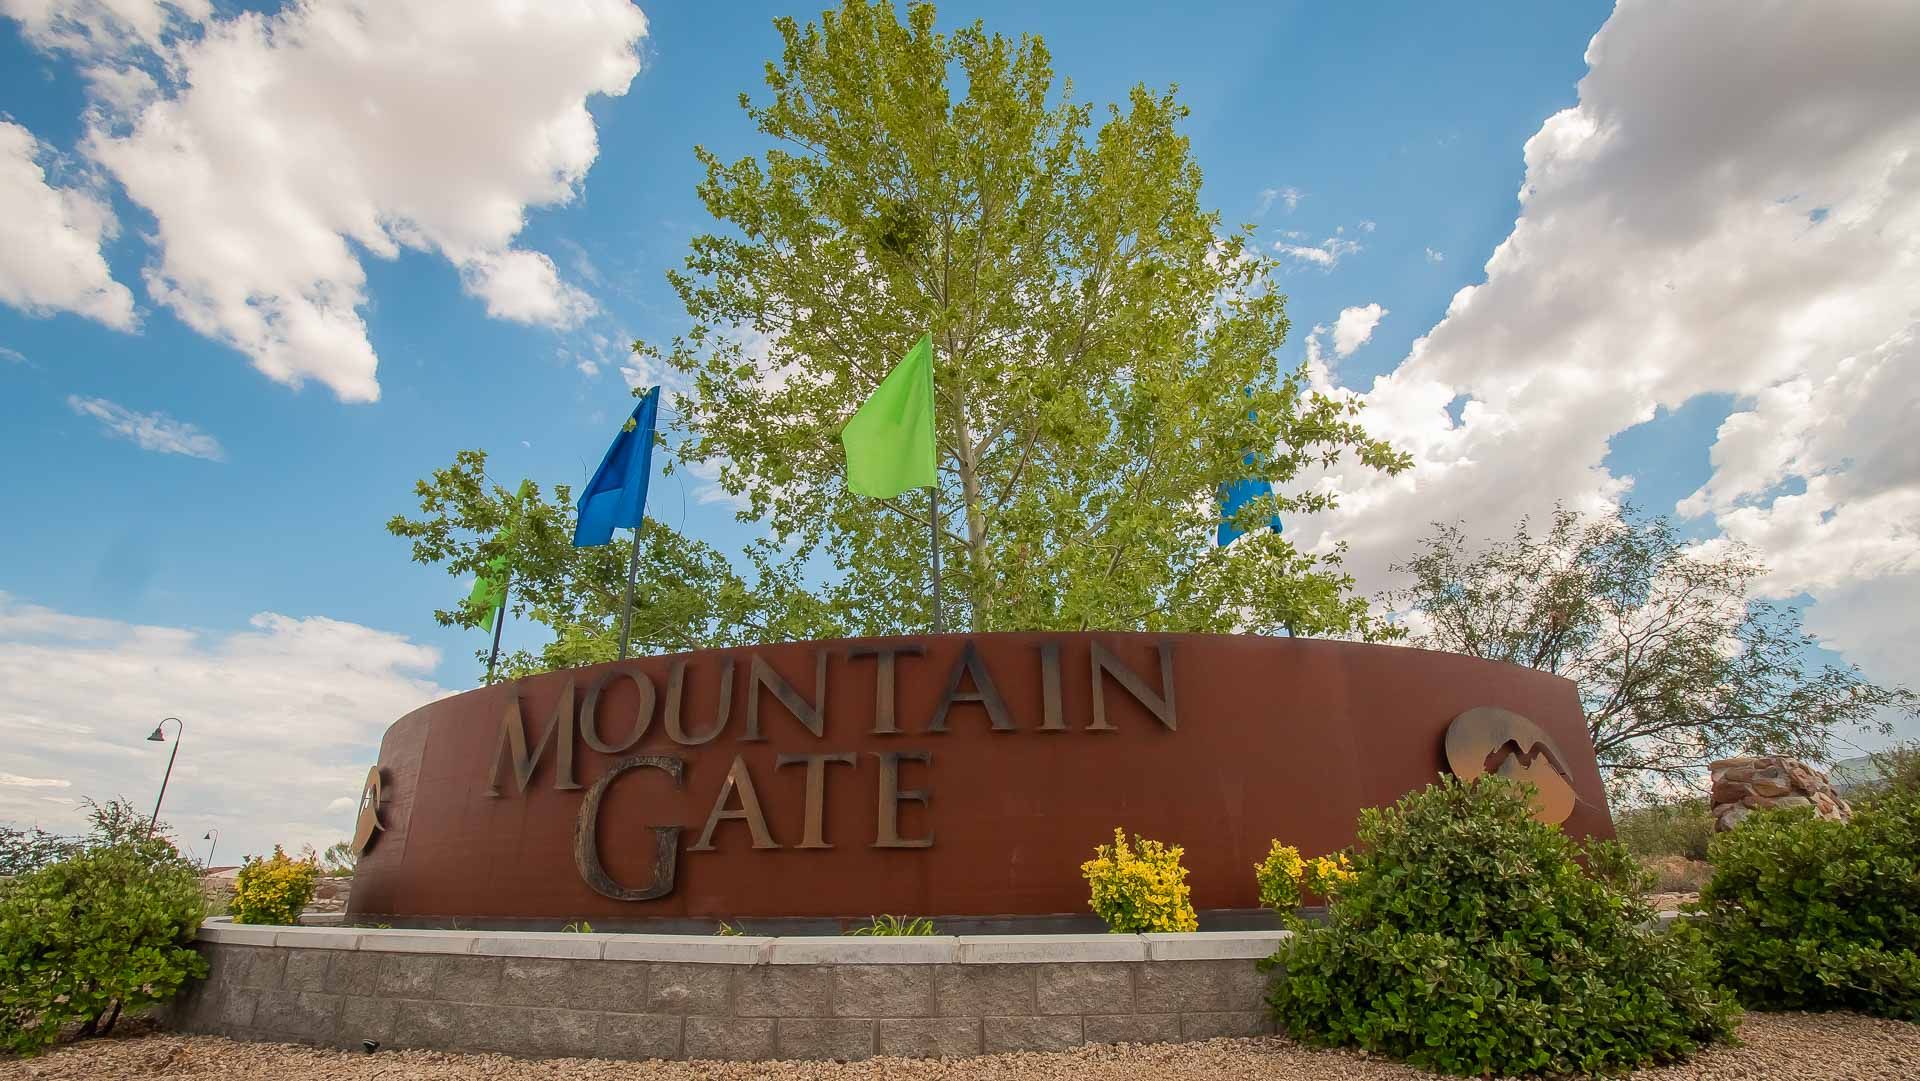 Mountain Gate